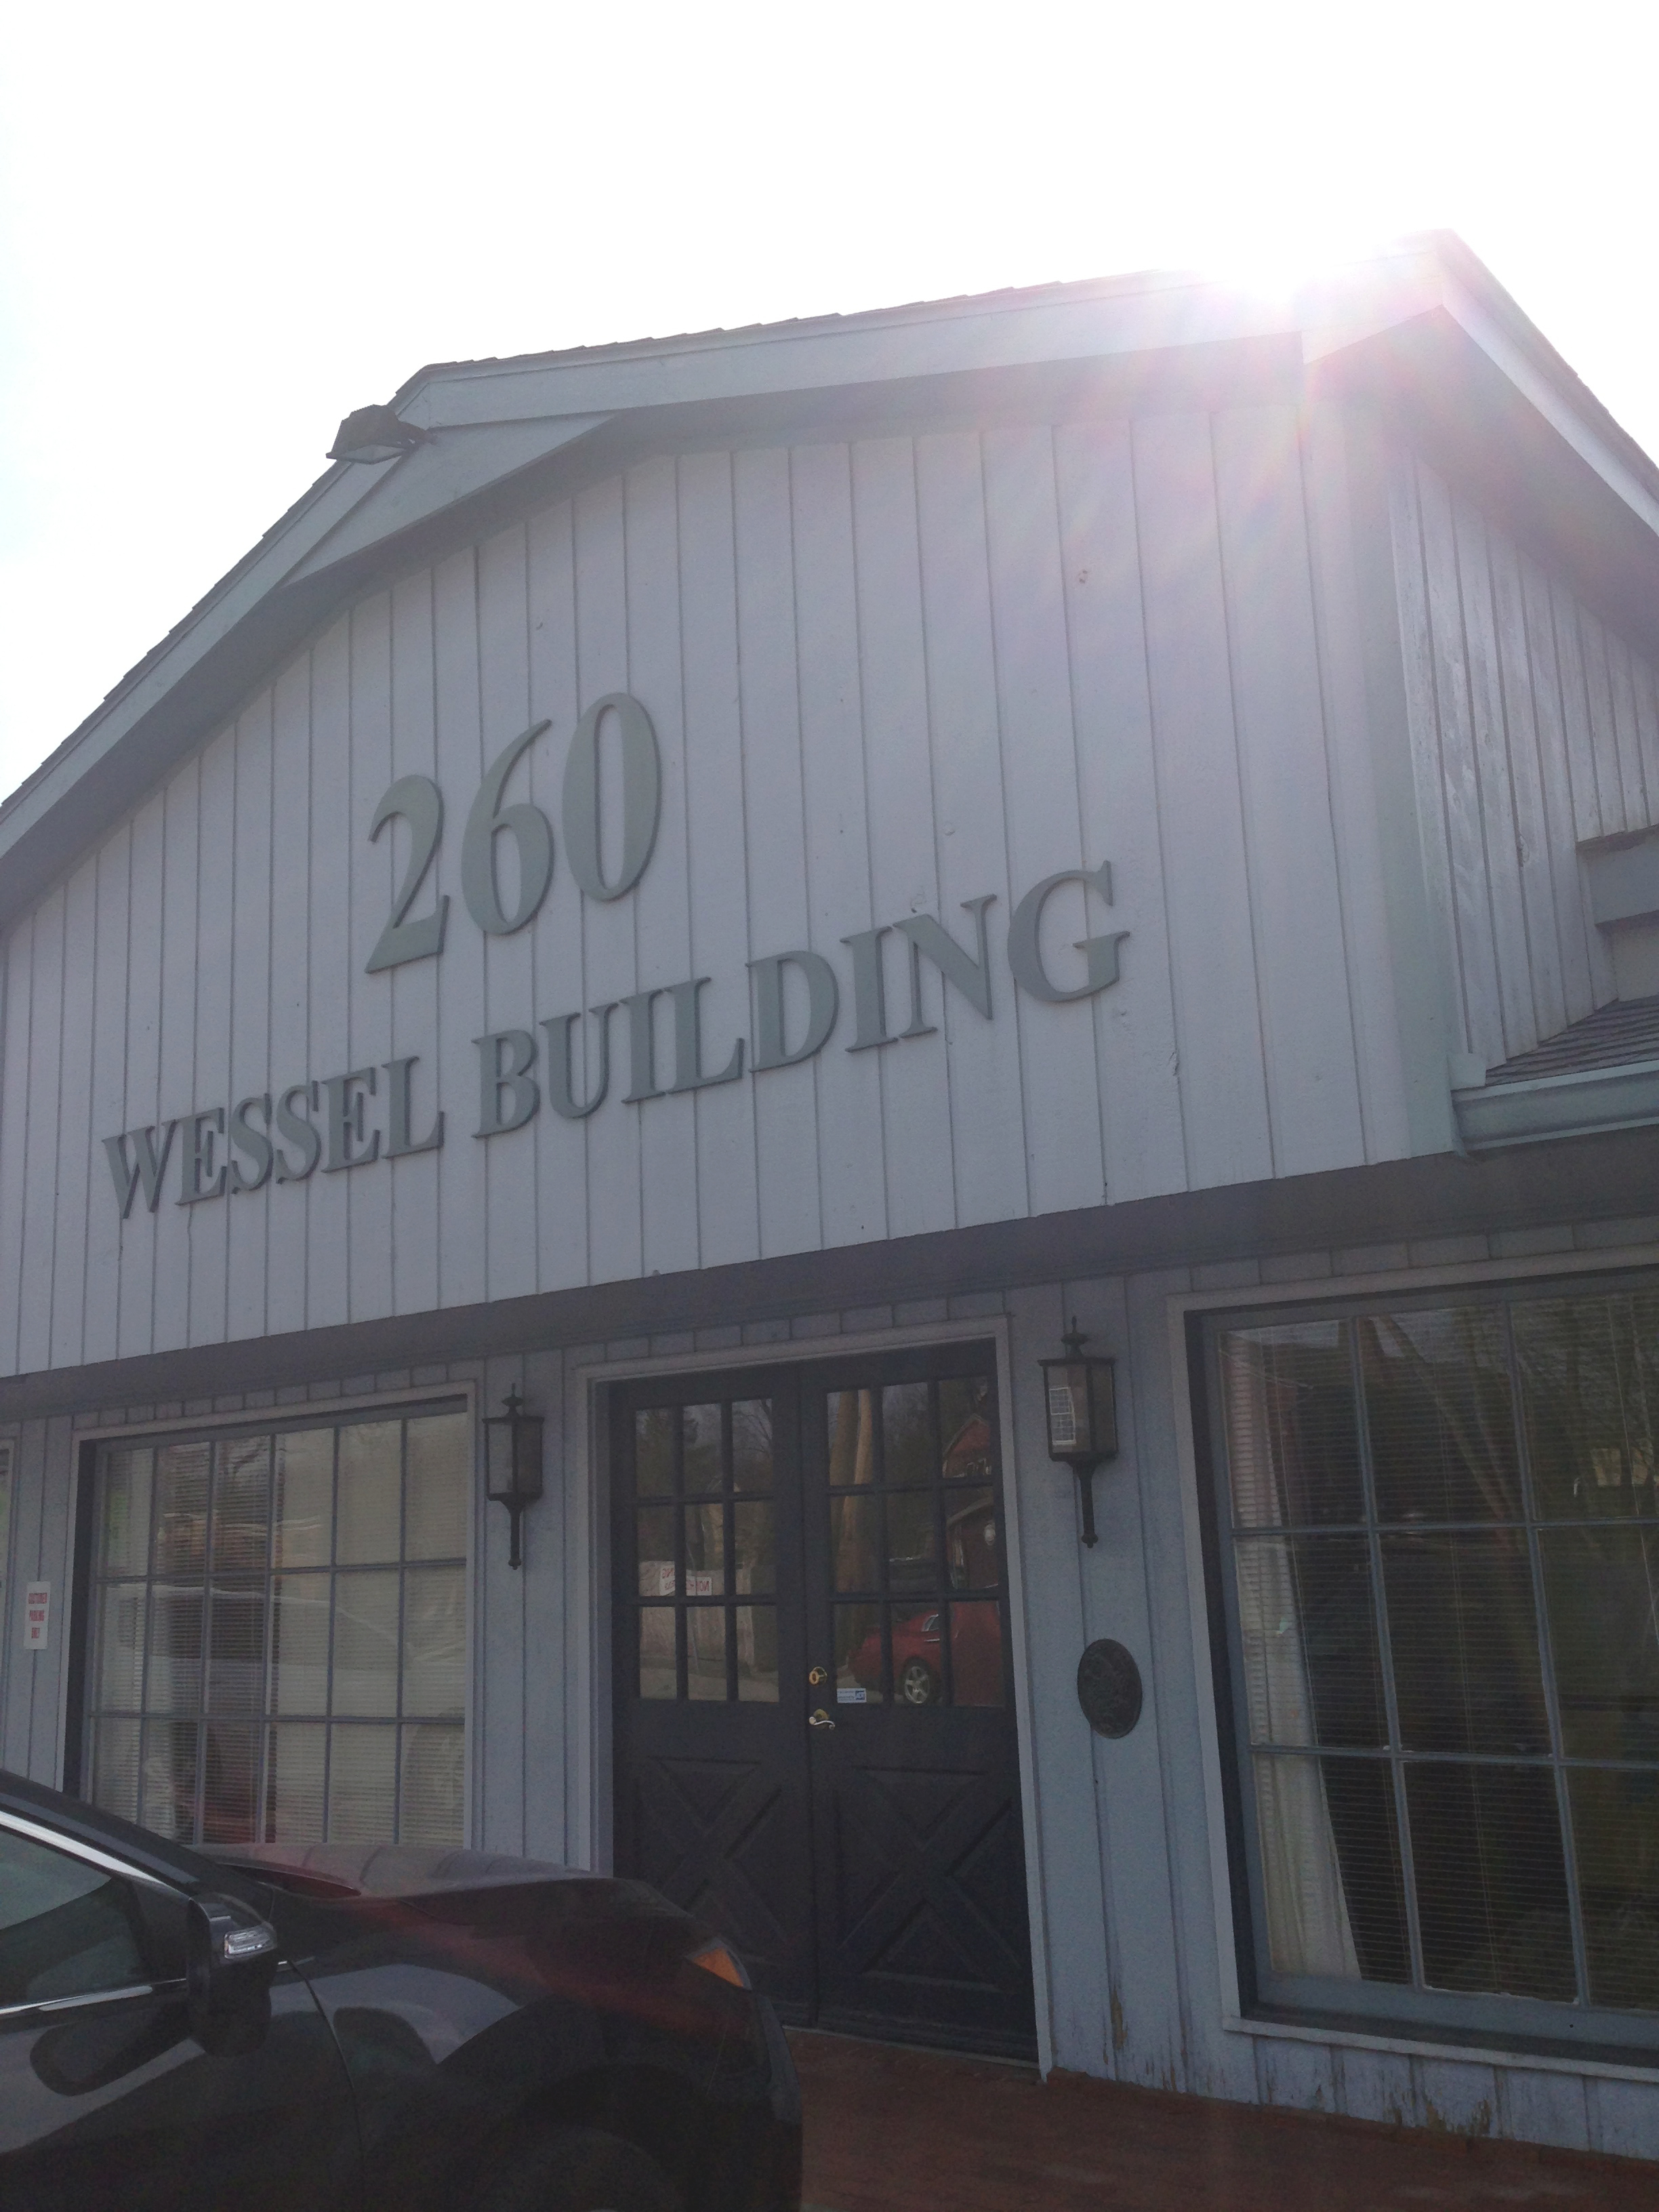 Wessel Building